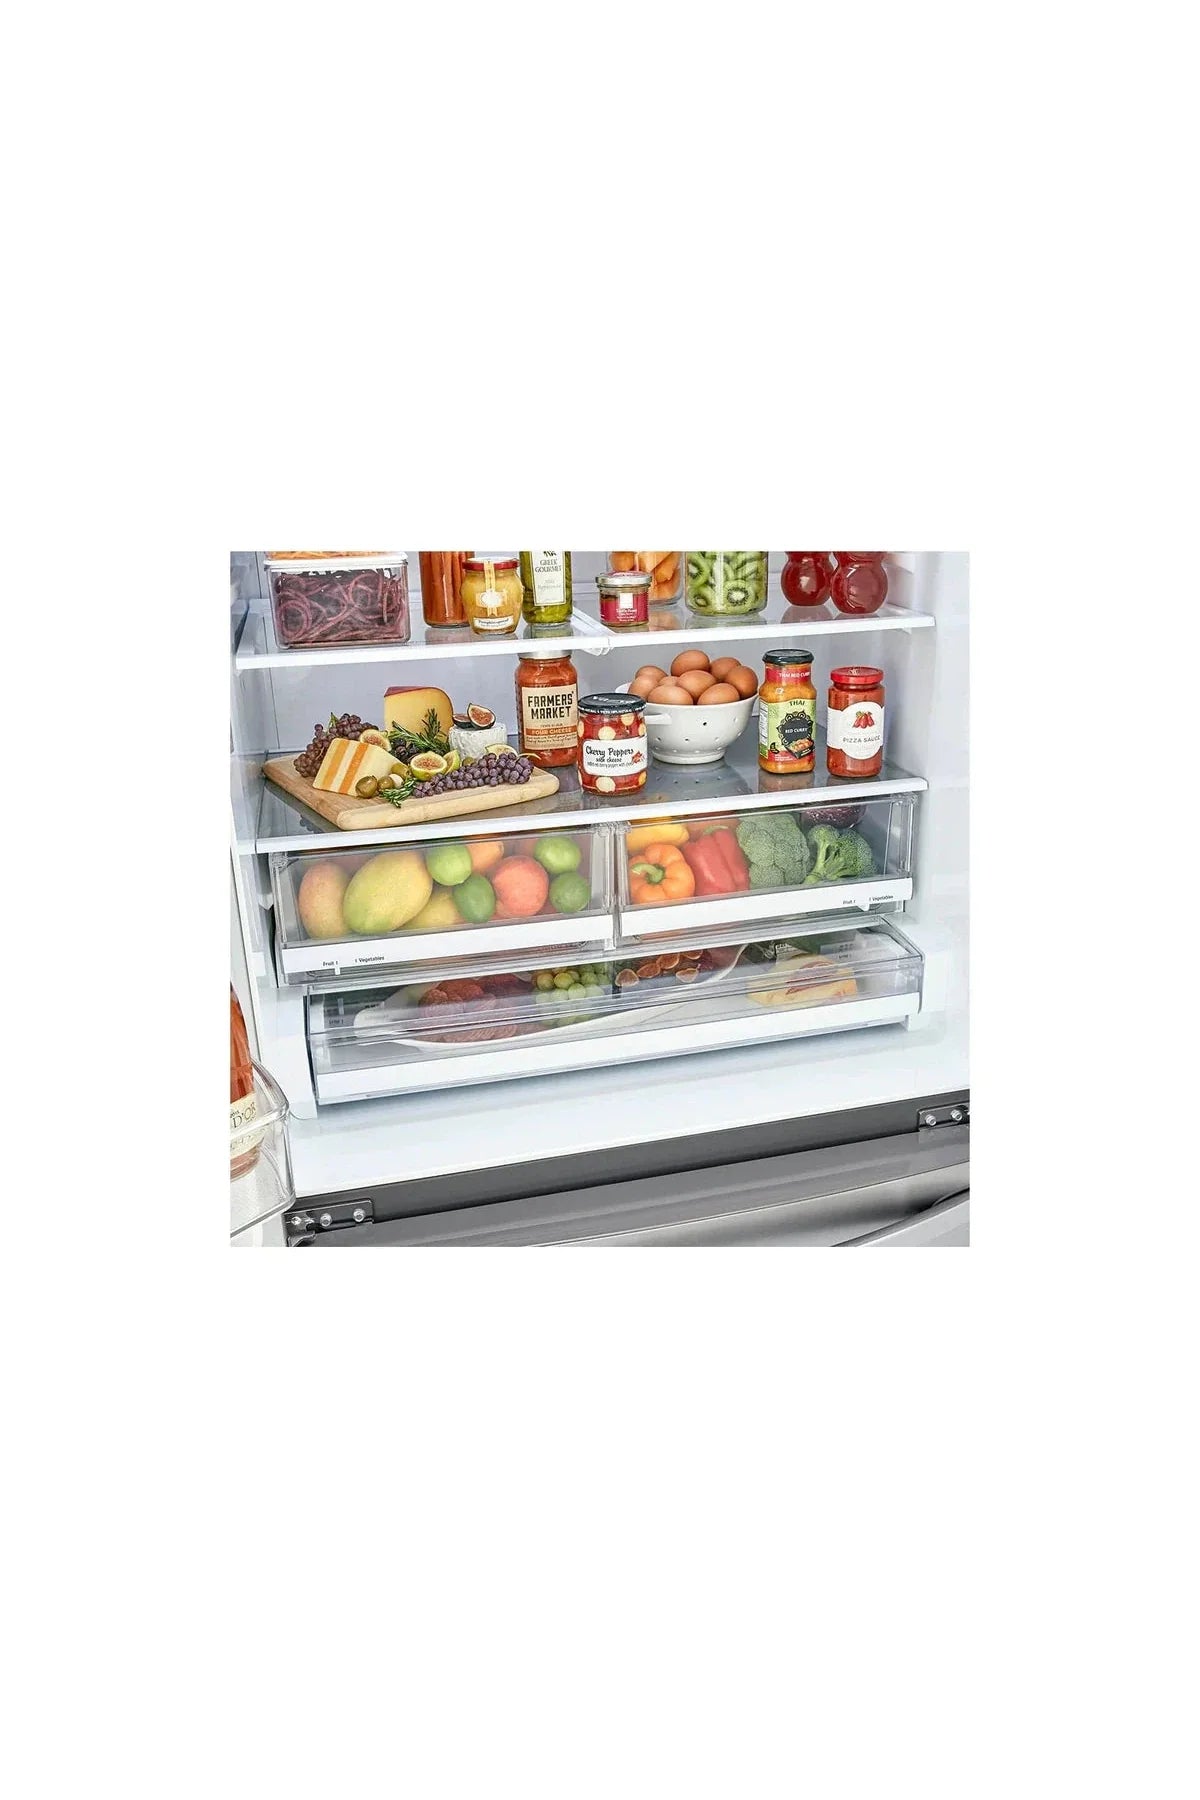 LG Refrigerator 36" Stainless Steel LFCC23596S - Appliance Bazaar